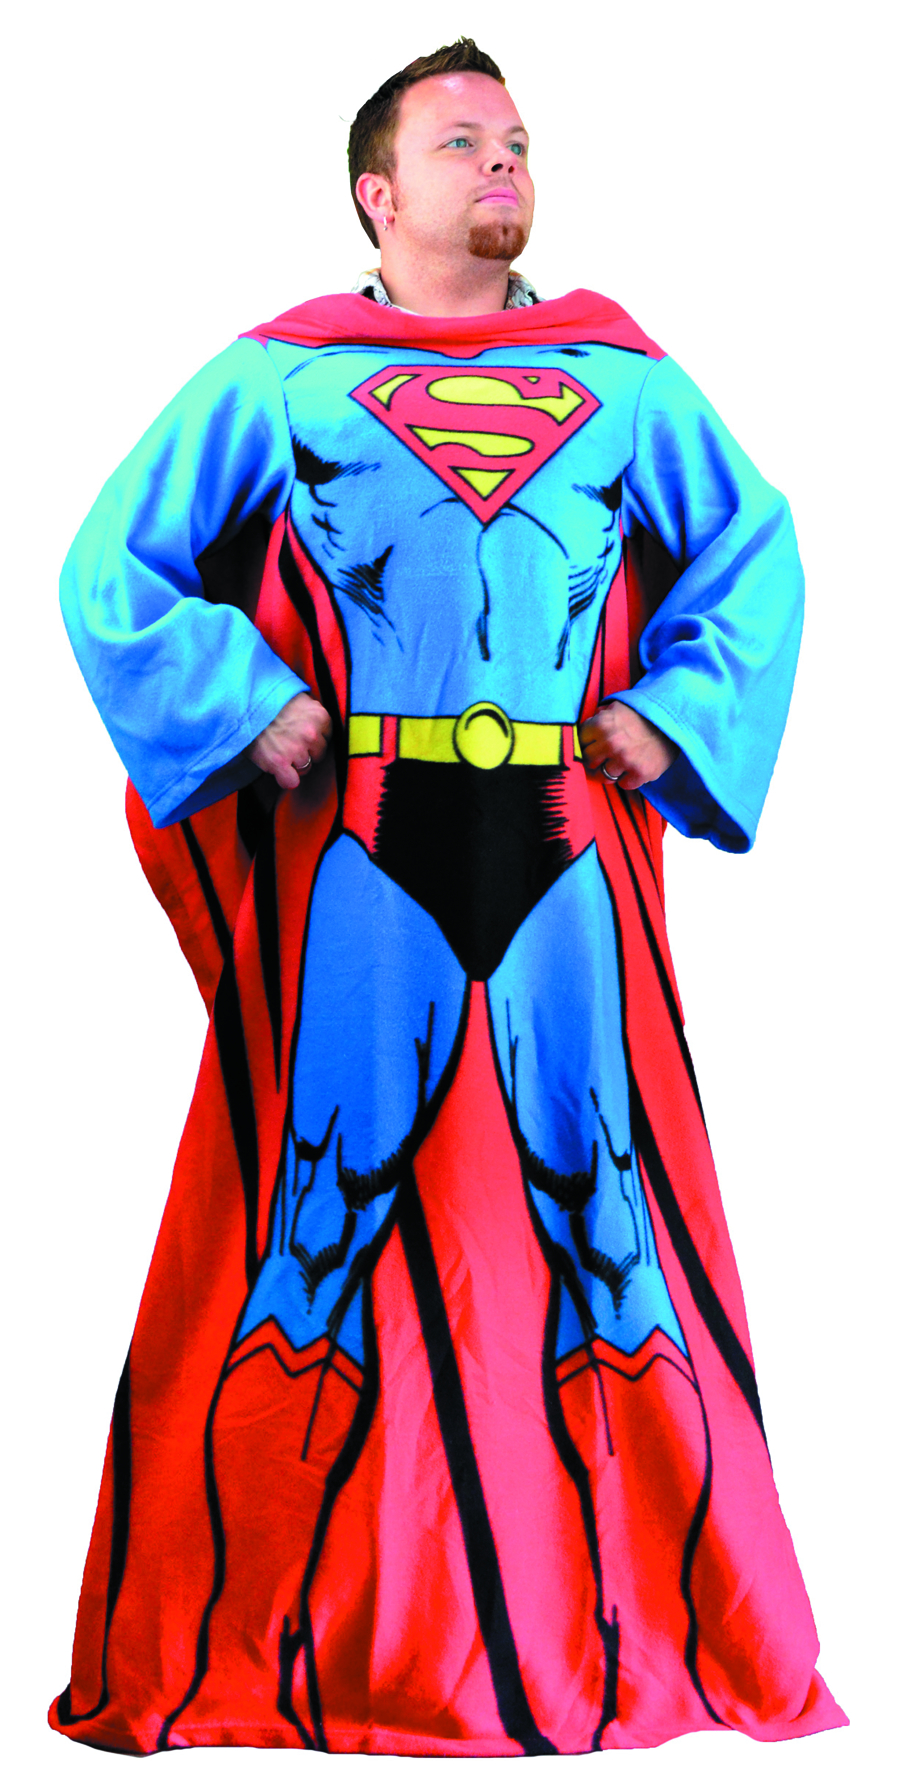 Він такий. Толстый в костюме Супермена.